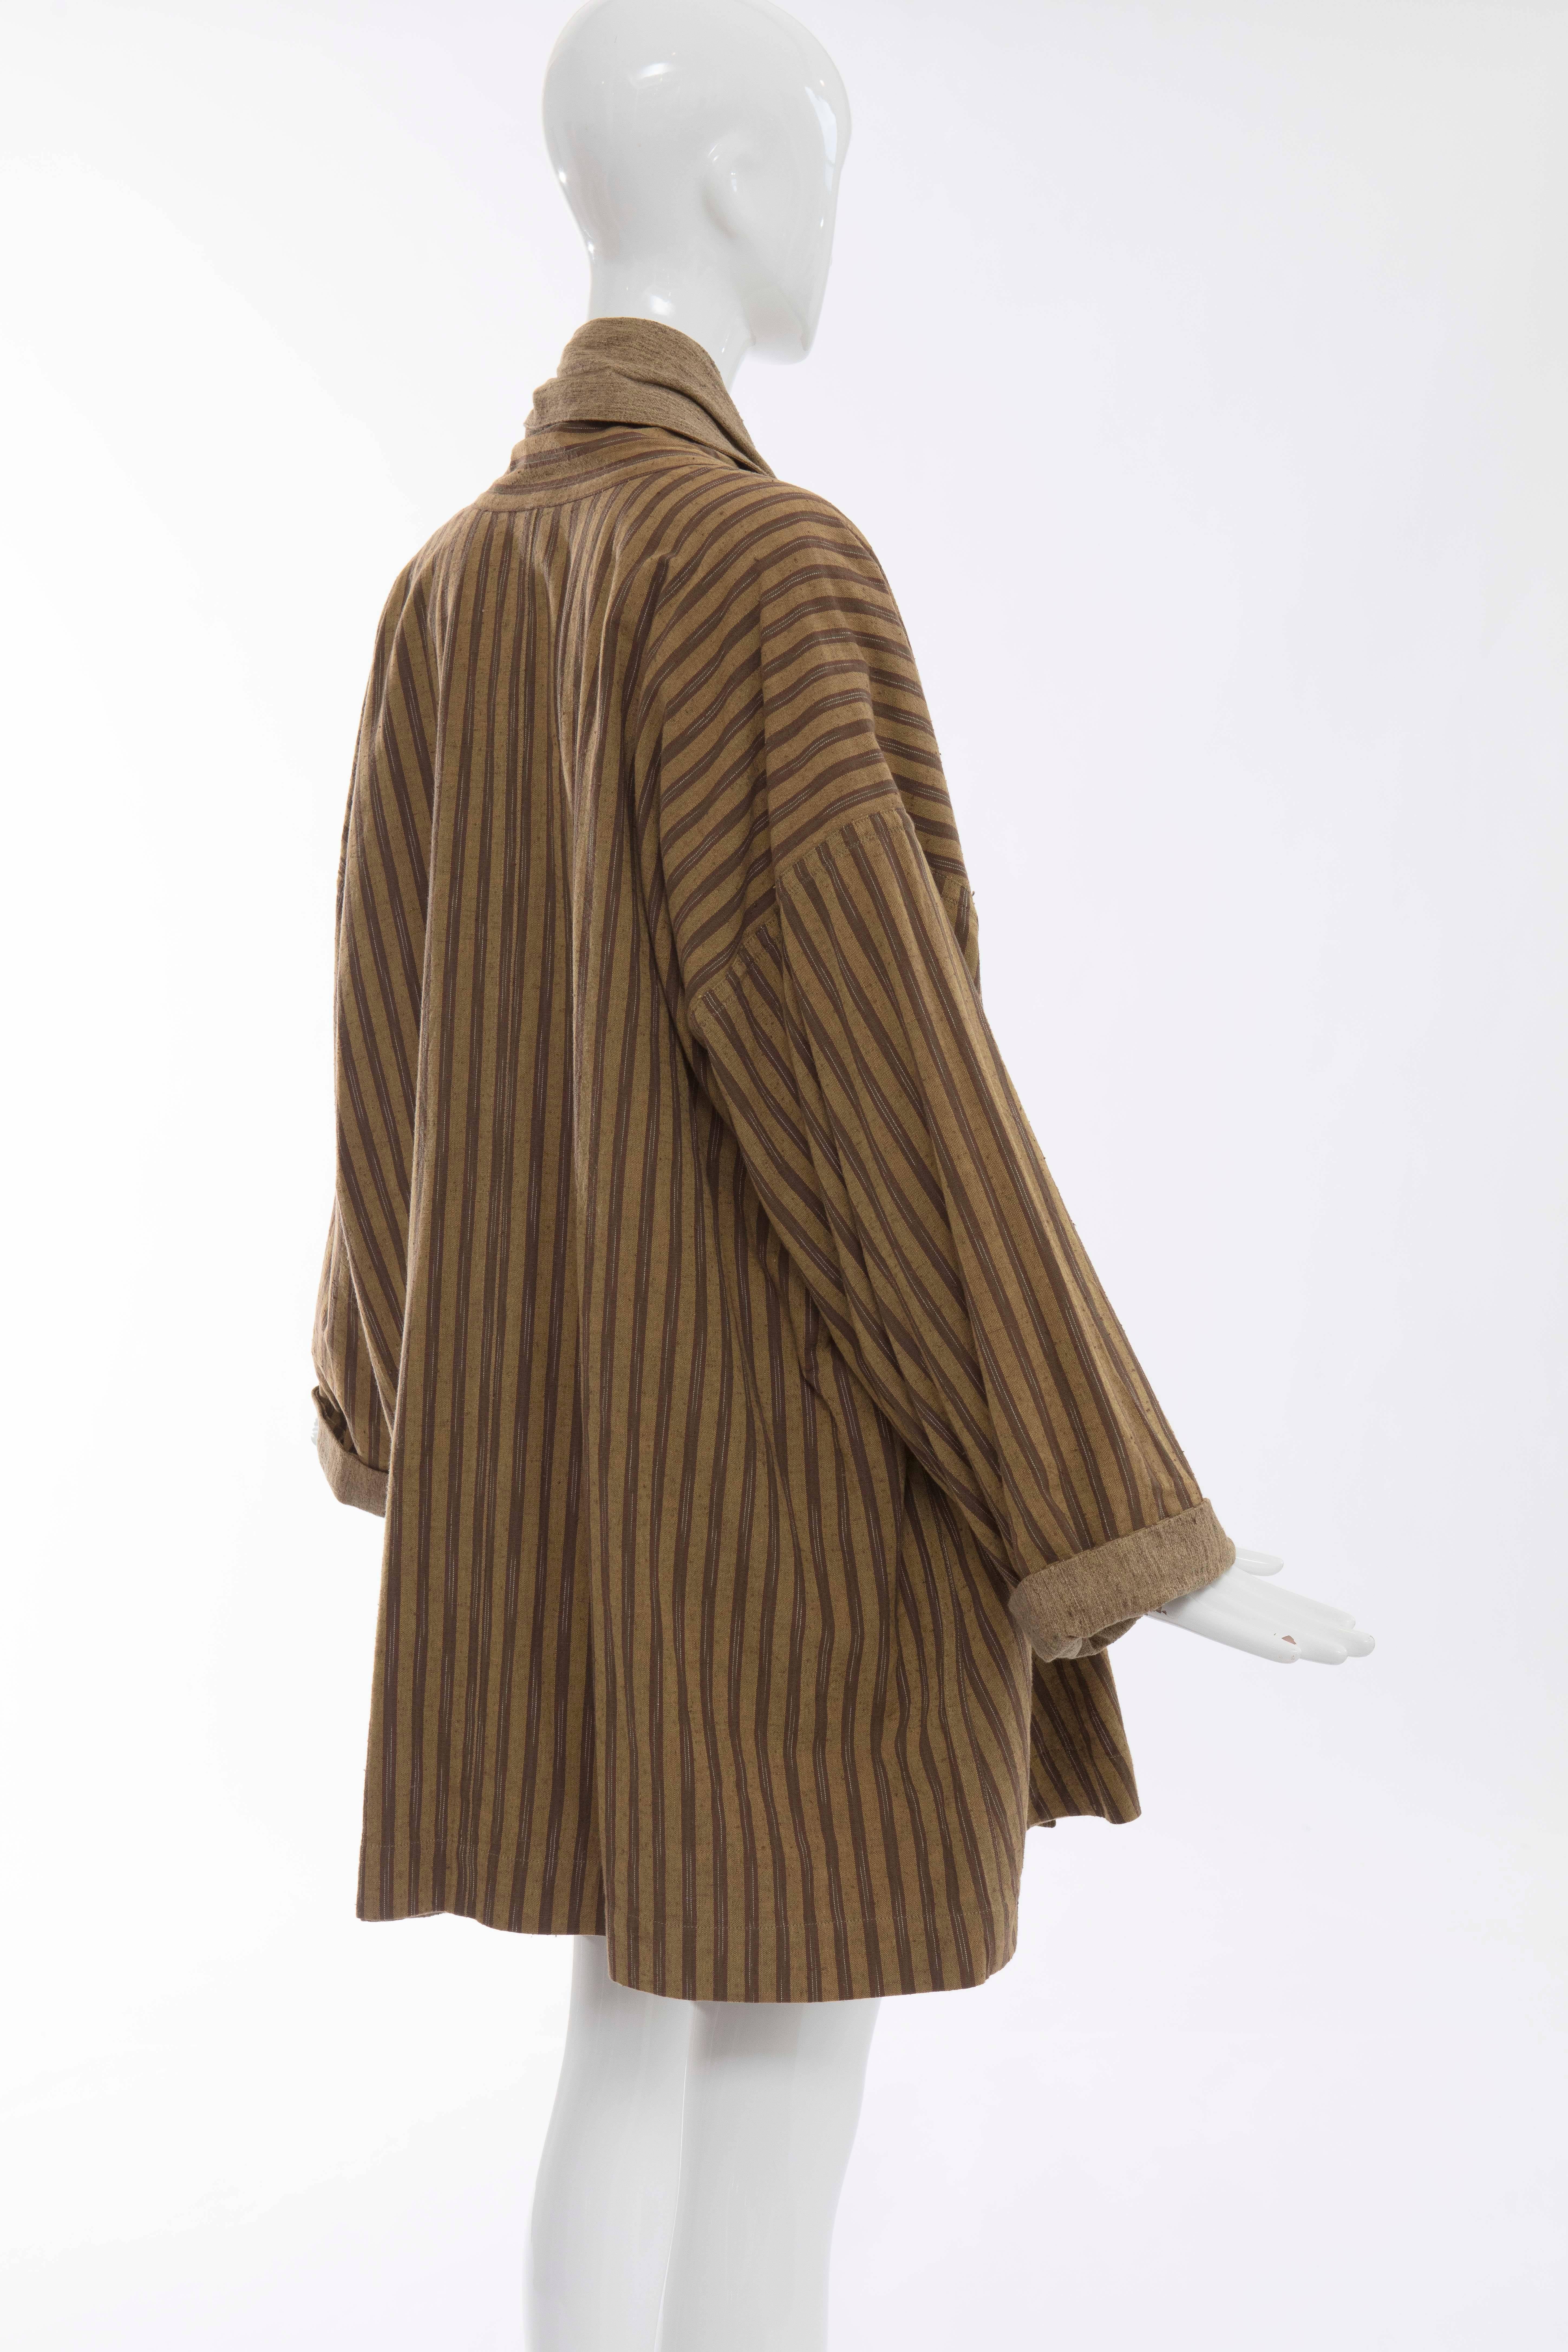 Issey Miyake Plantation Reversible Striped Woven Cotton Jacket, Circa 1980's 1